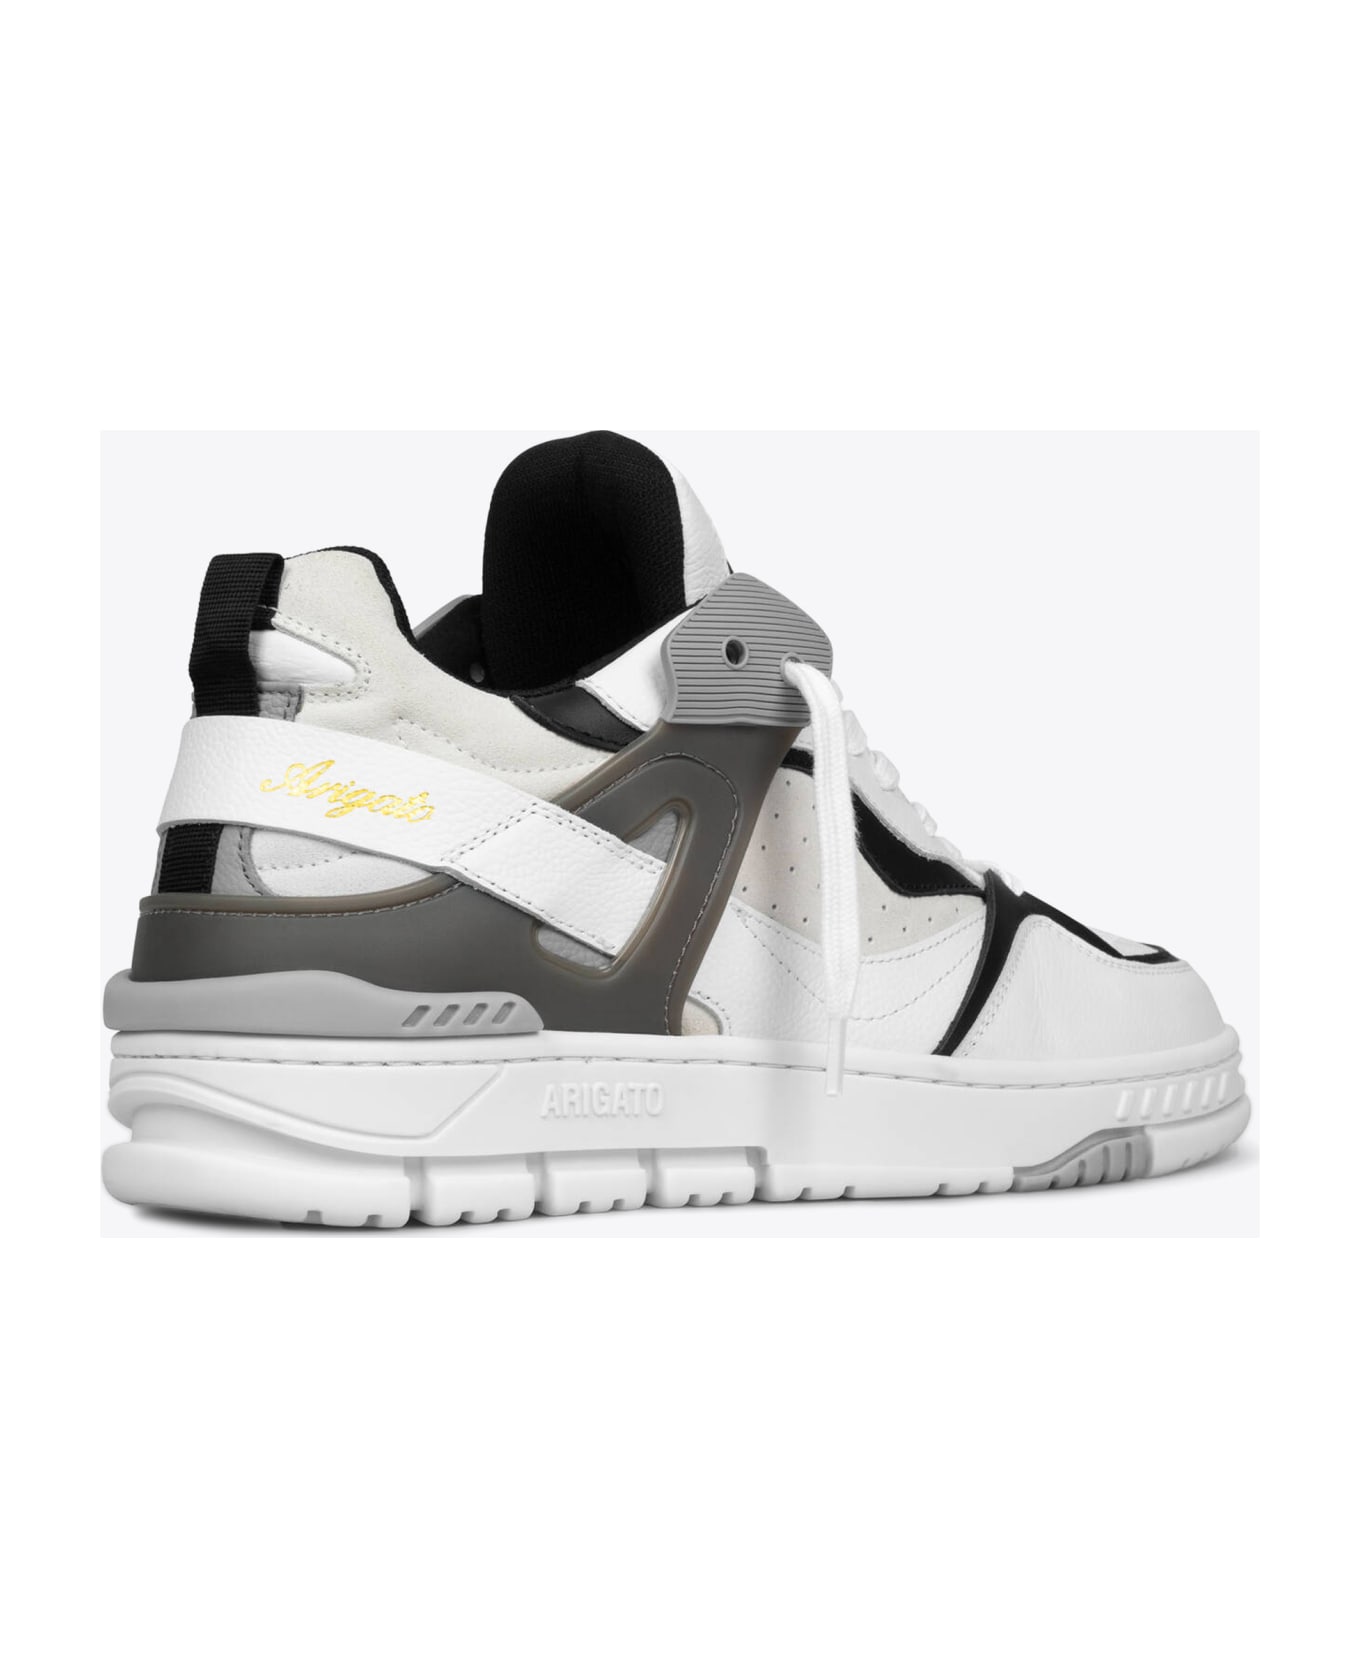 Axel Arigato Astro Sneaker White and black leather 90s style low sneaker - Astro Sneaker - Bianco/nero